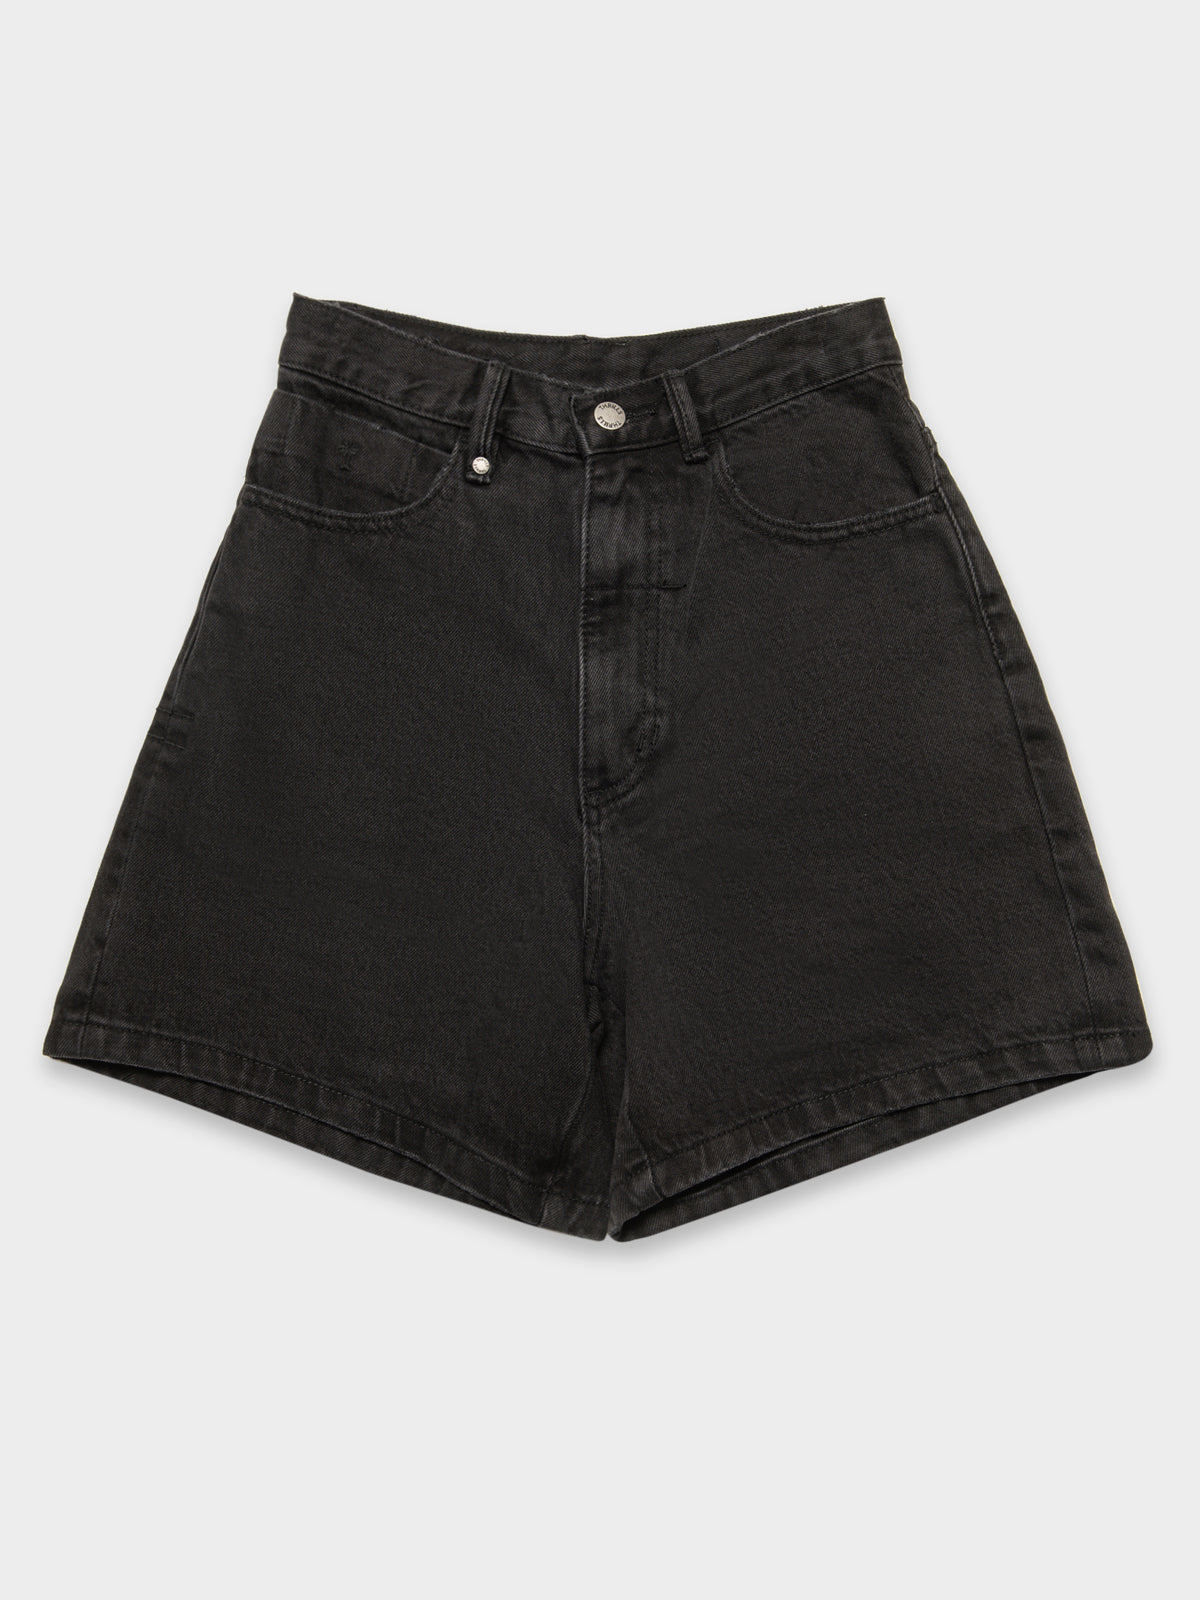 Koko Denim Shorts in Aged Black